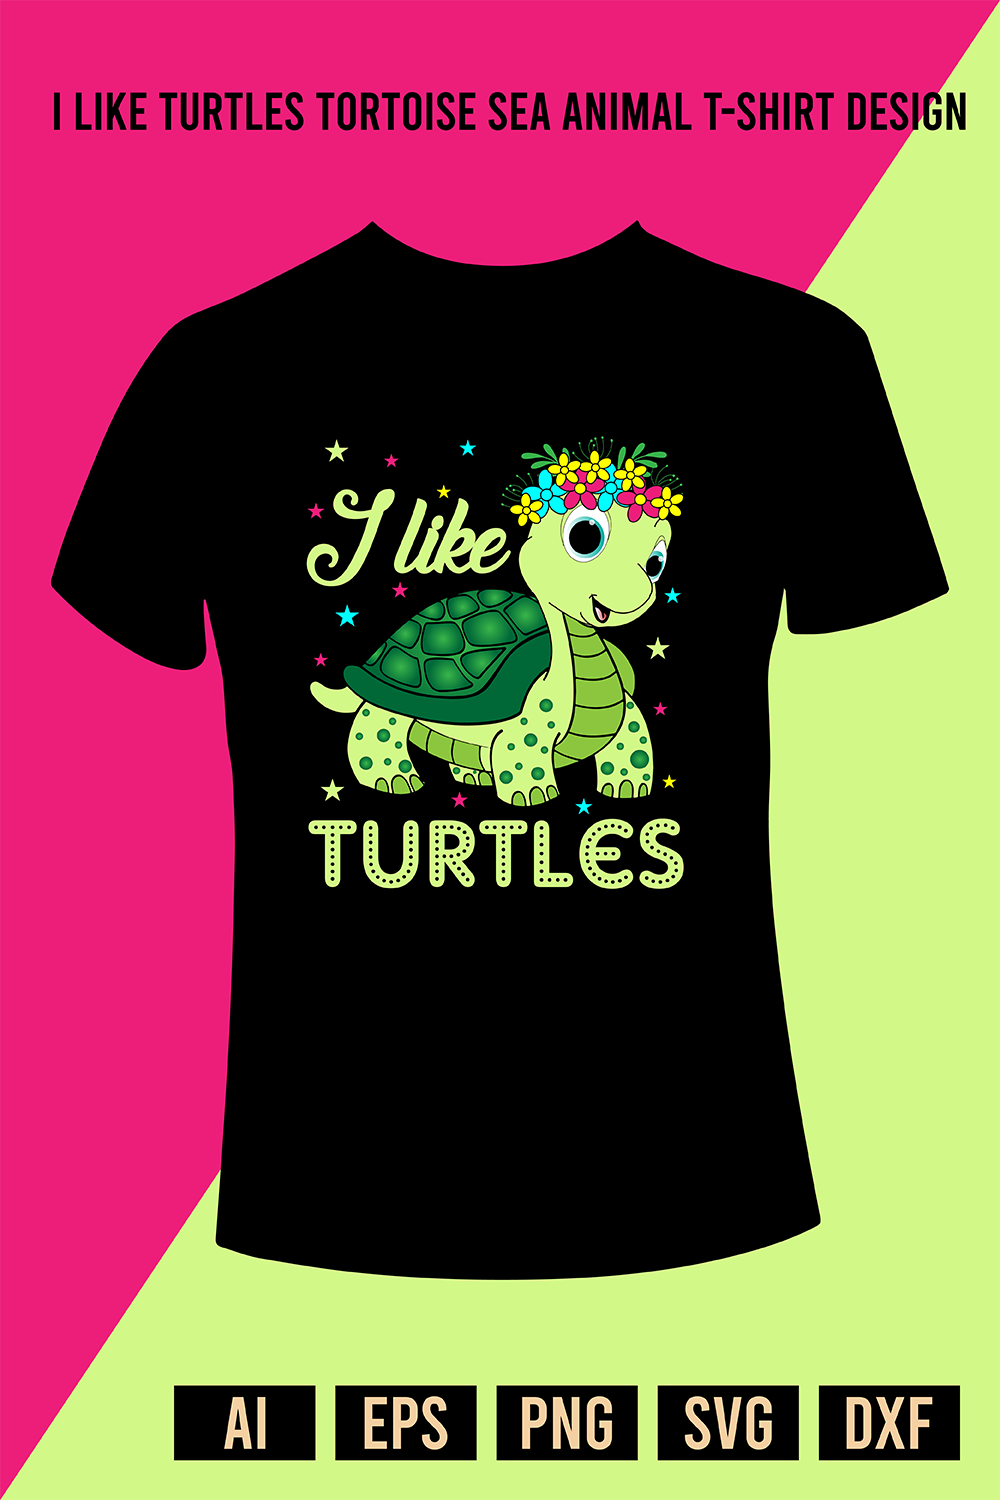 I like Turtles Tortoise Sea Animal T-Shirt Design pinterest preview image.